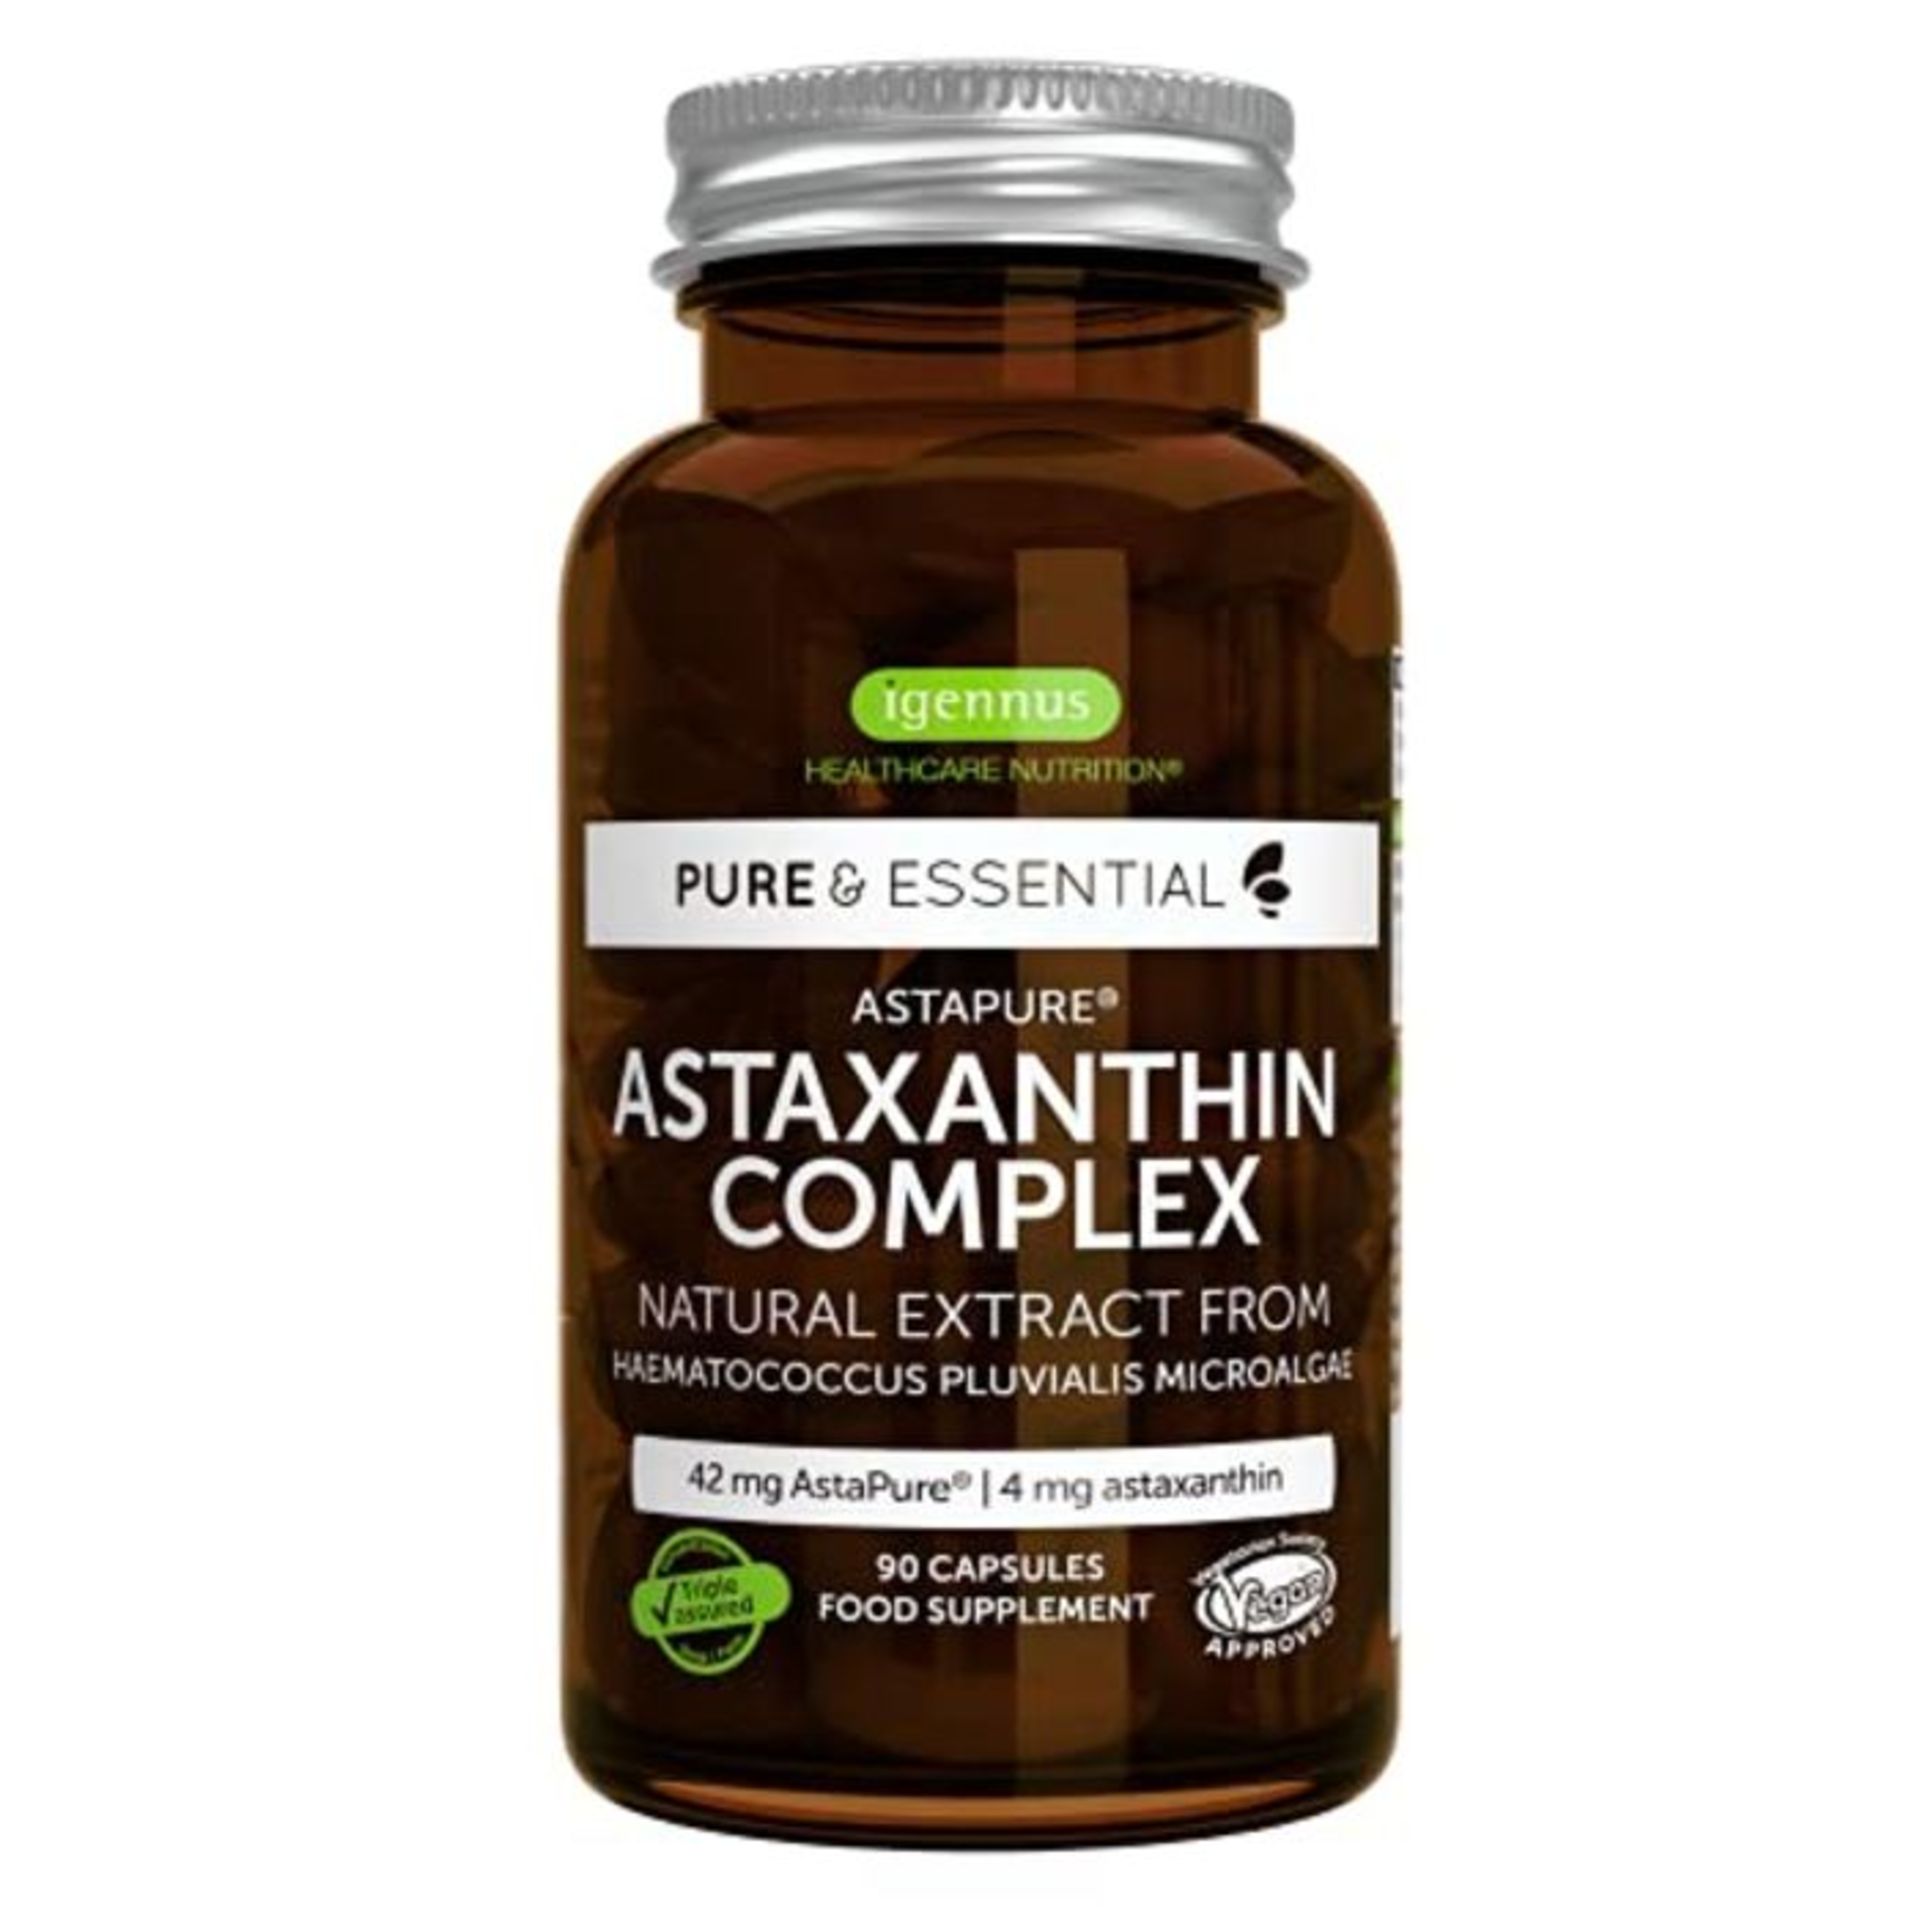 Pure & Essential Astaxanthin Complex, 42 mg Astapure Providing 4 mg H. Pluvialis Astax